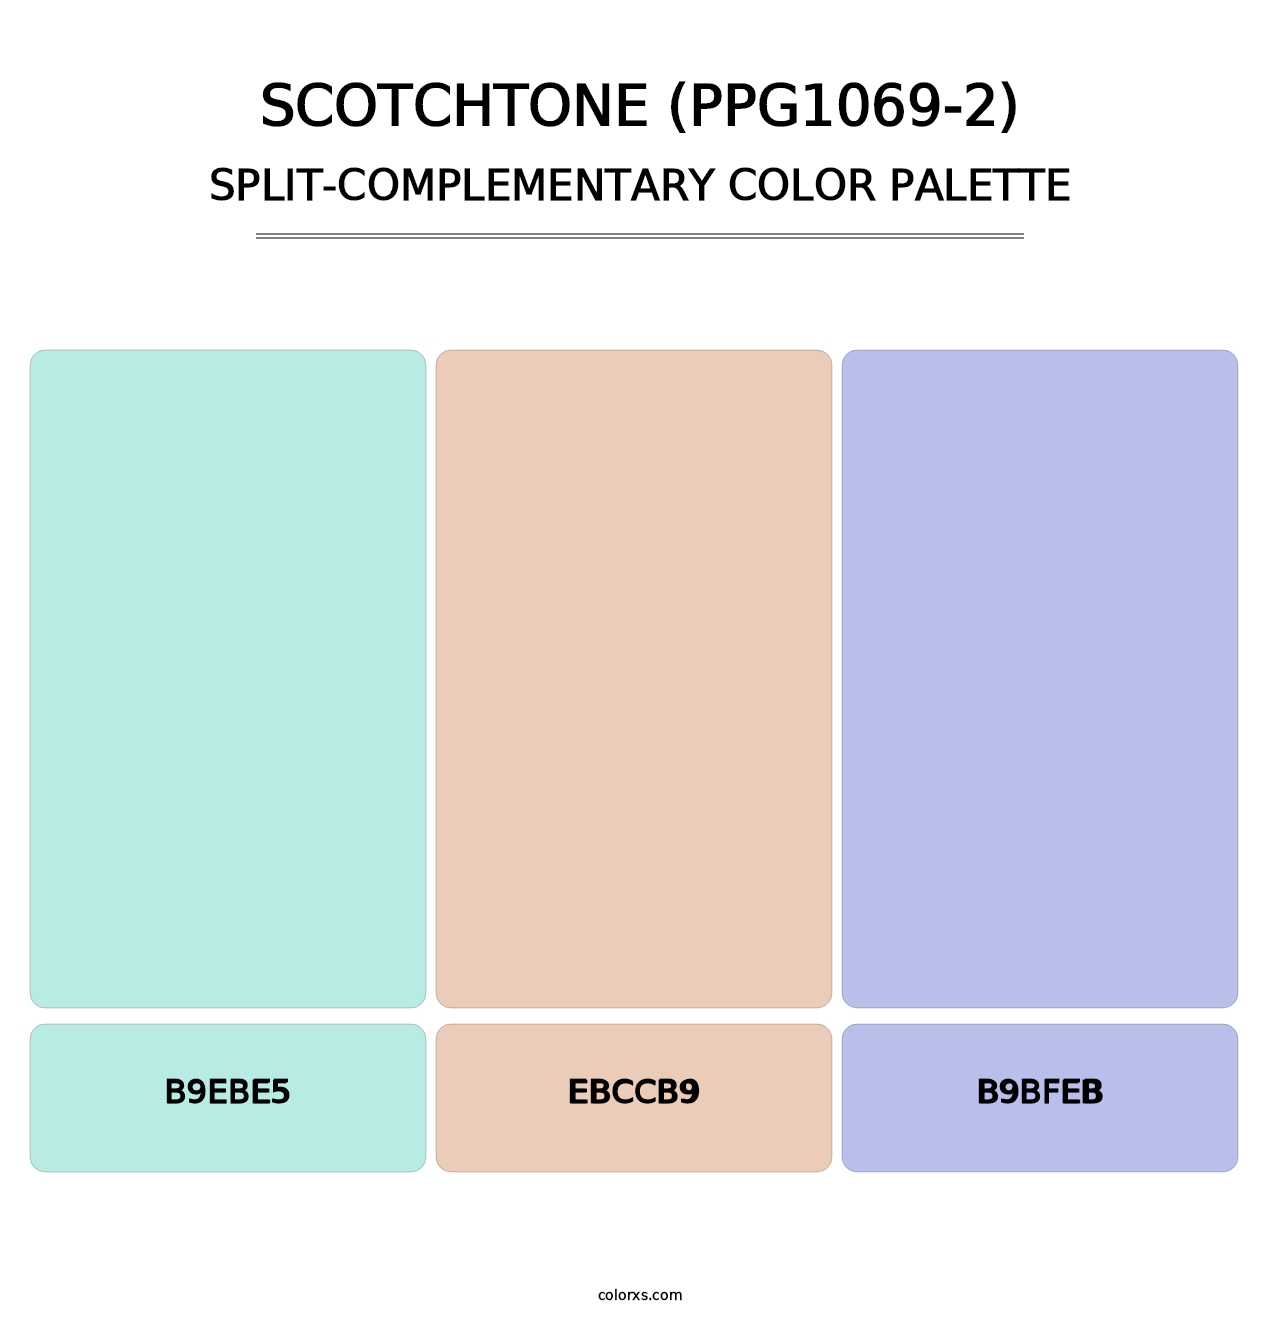 Scotchtone (PPG1069-2) - Split-Complementary Color Palette